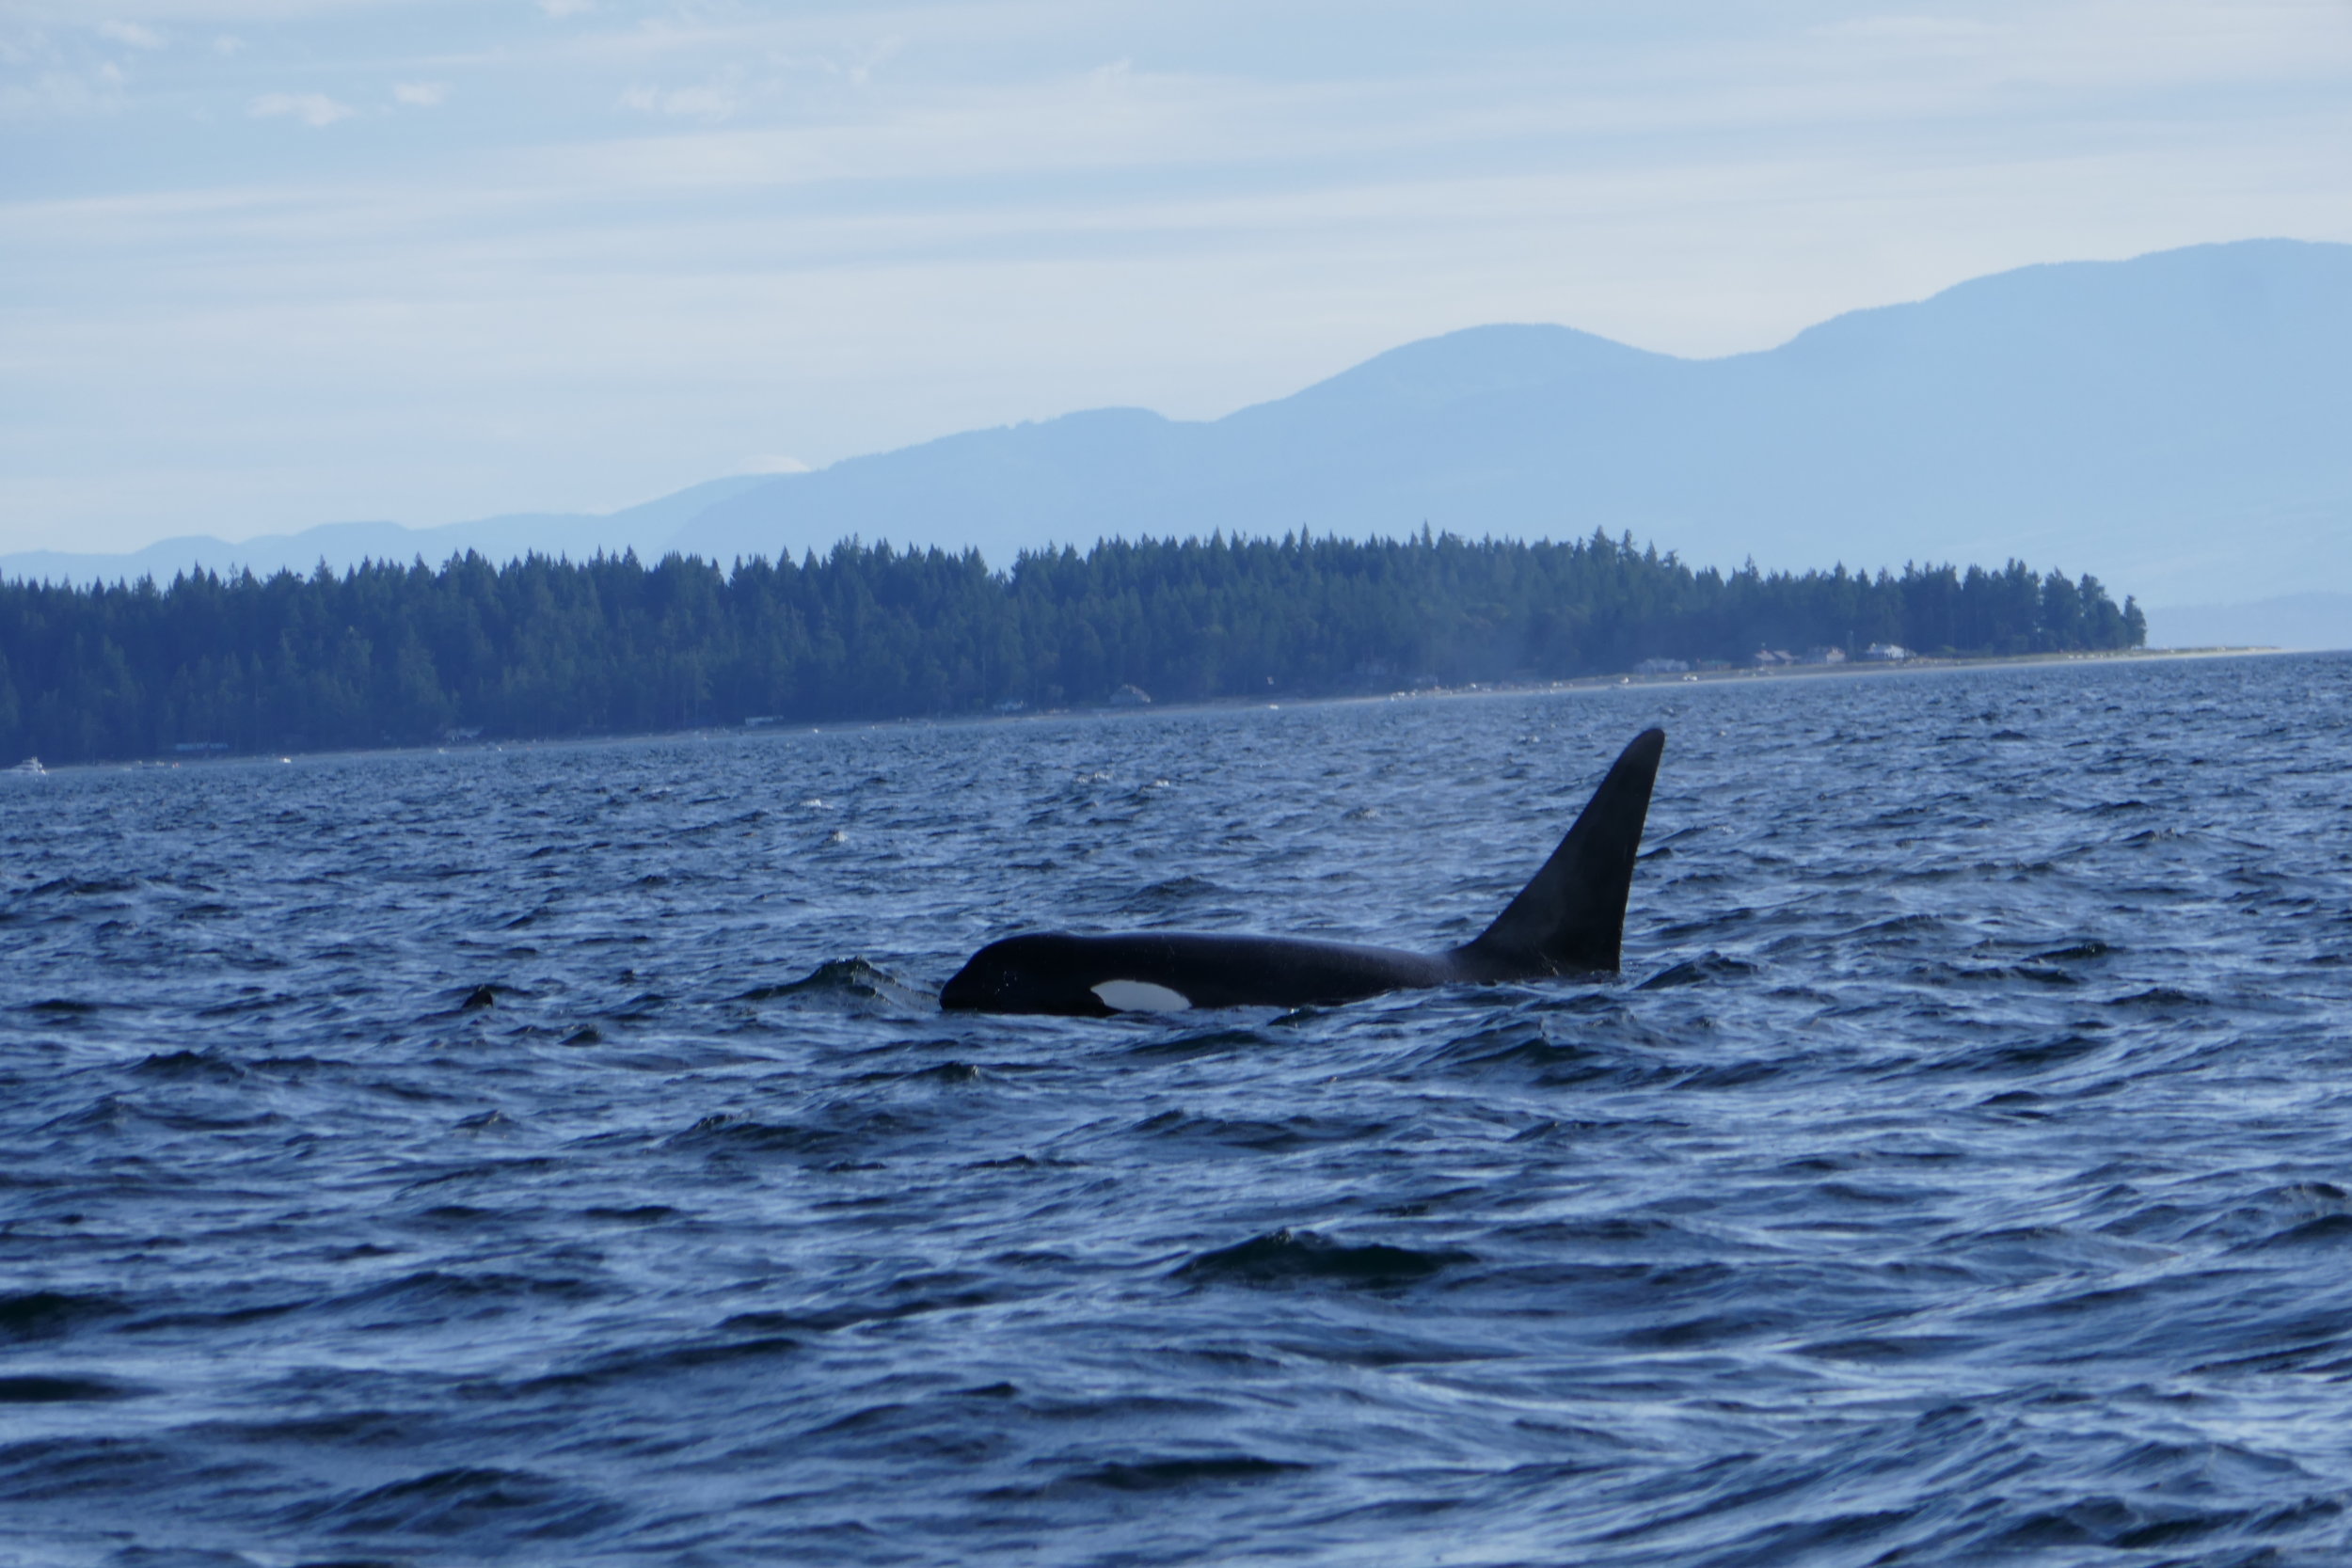   Orca Whale, Lund, British Columbia, Canada.  